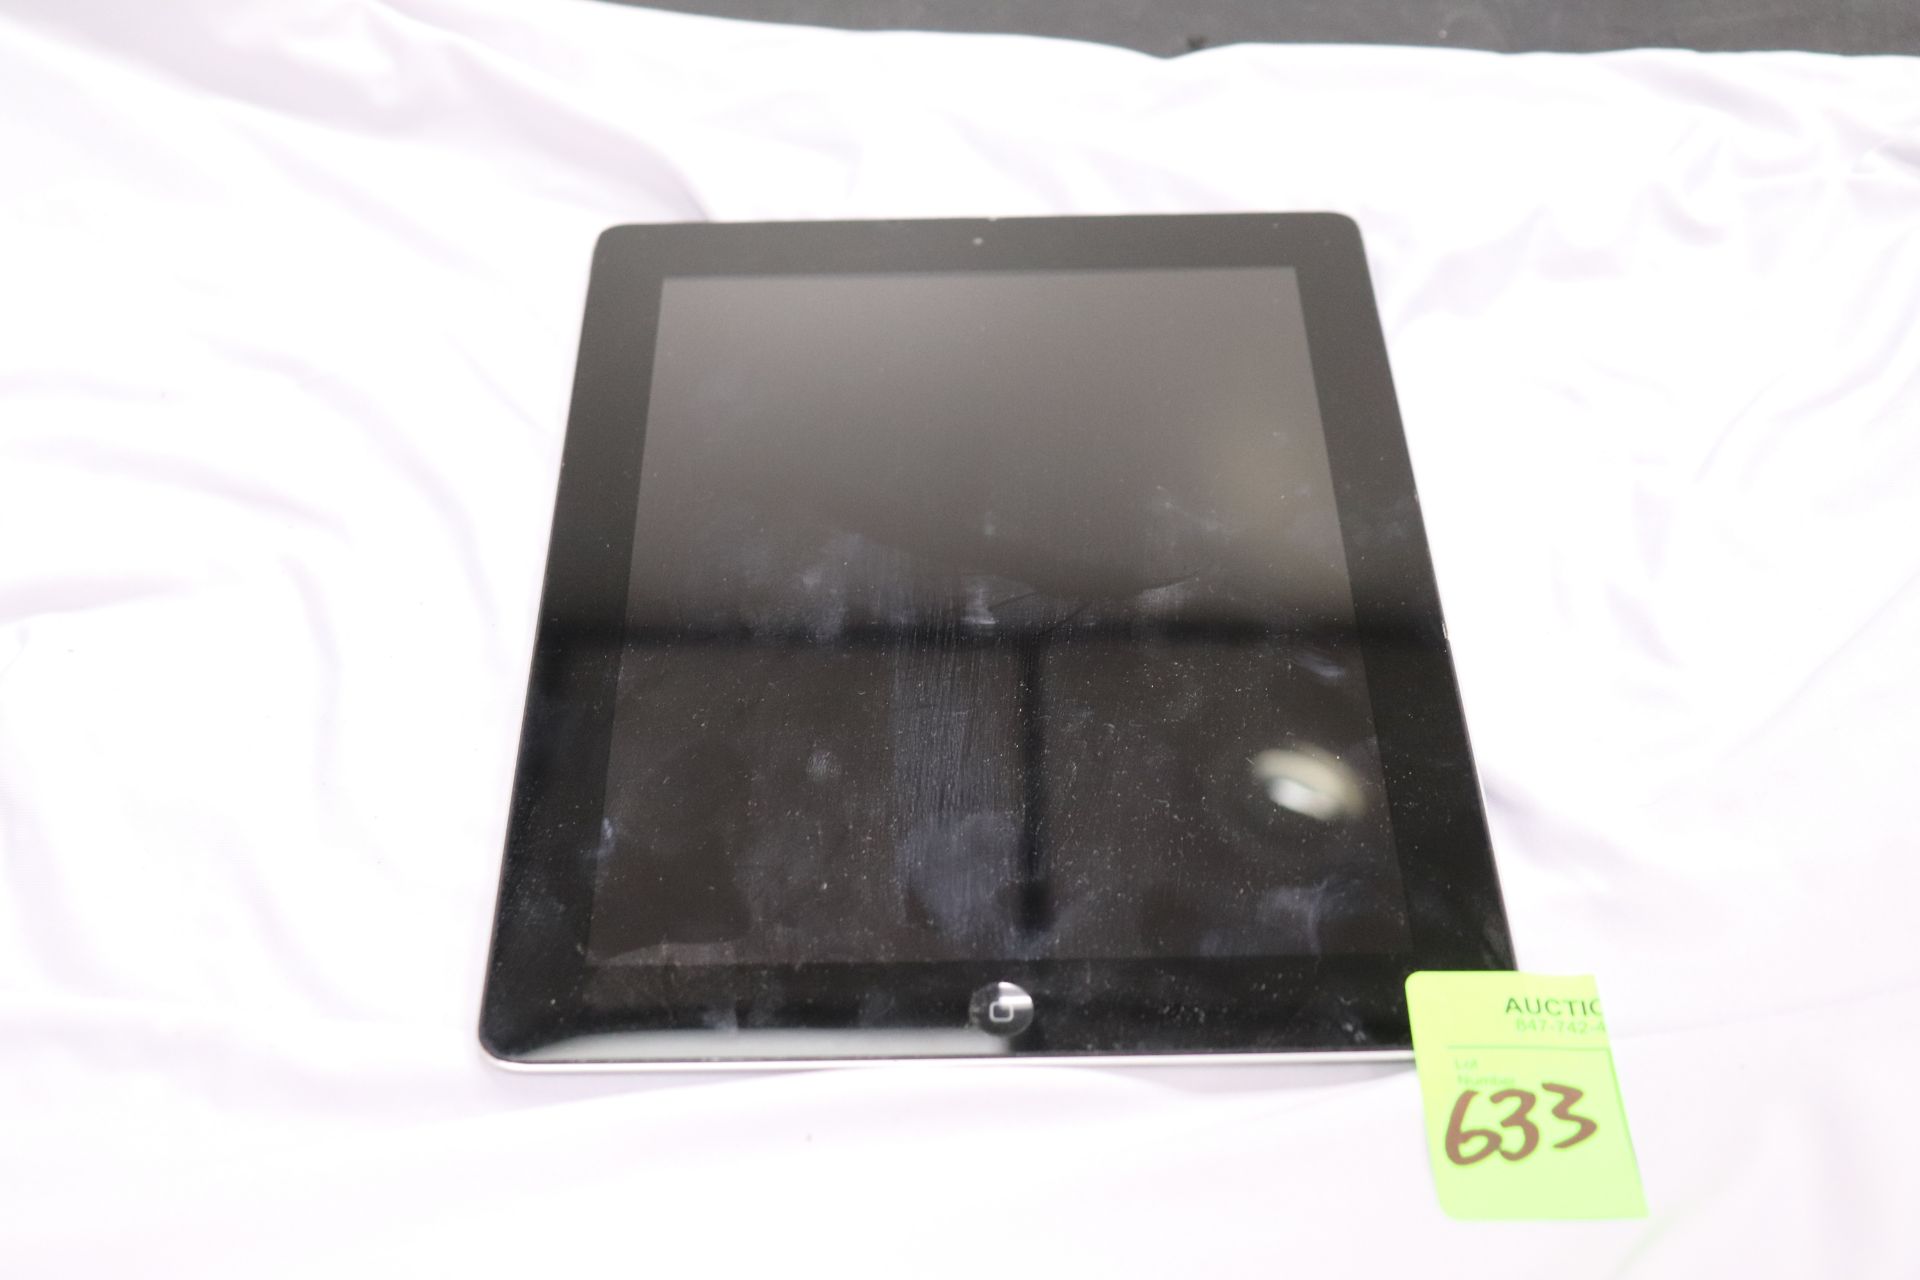 Apple iPad, model A1459 - Image 2 of 4